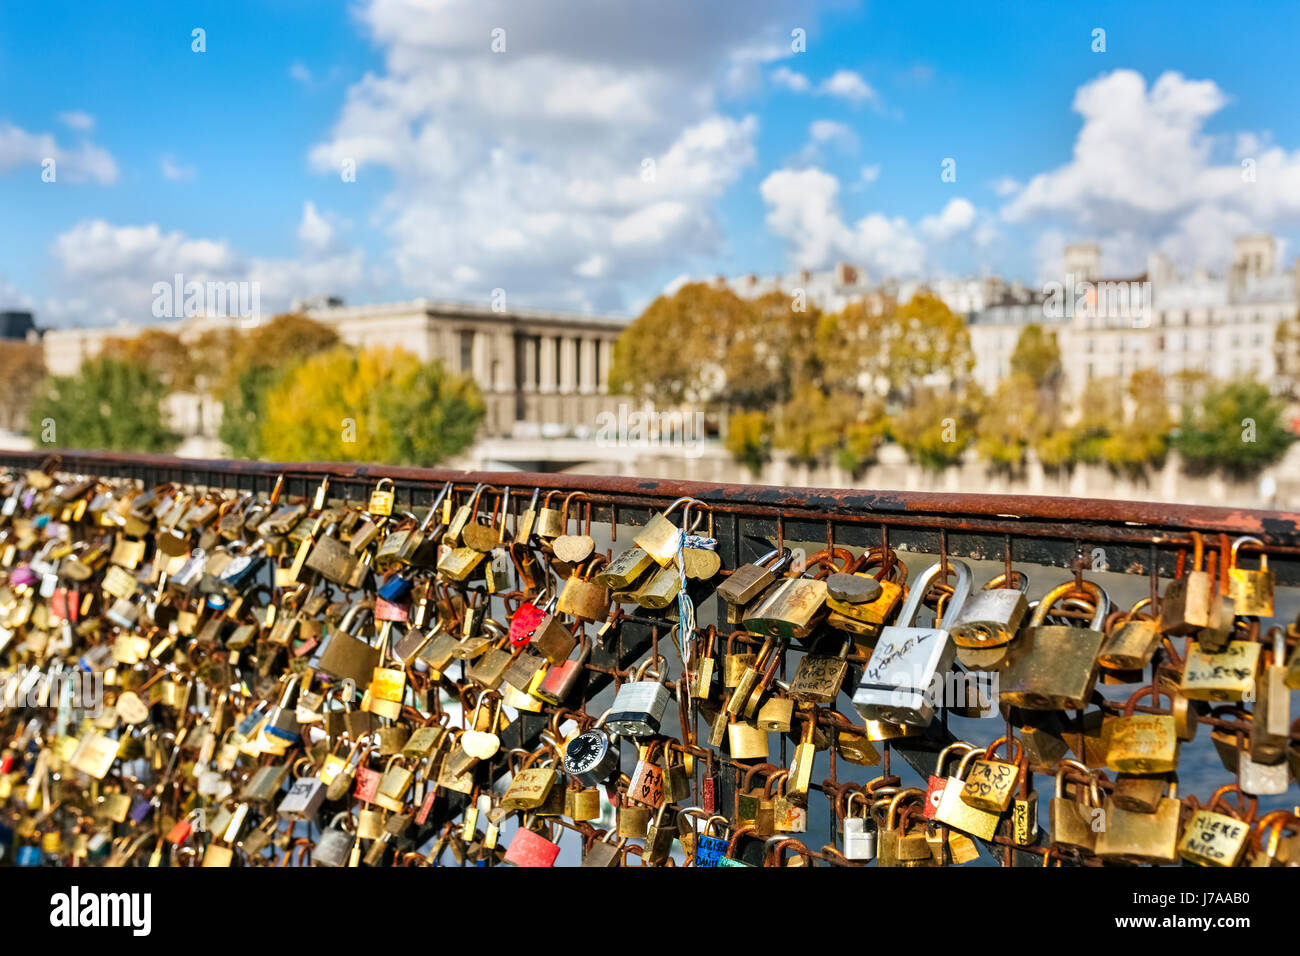 France, Paris, love locks at railing of a bridge over Seine River Stock Photo